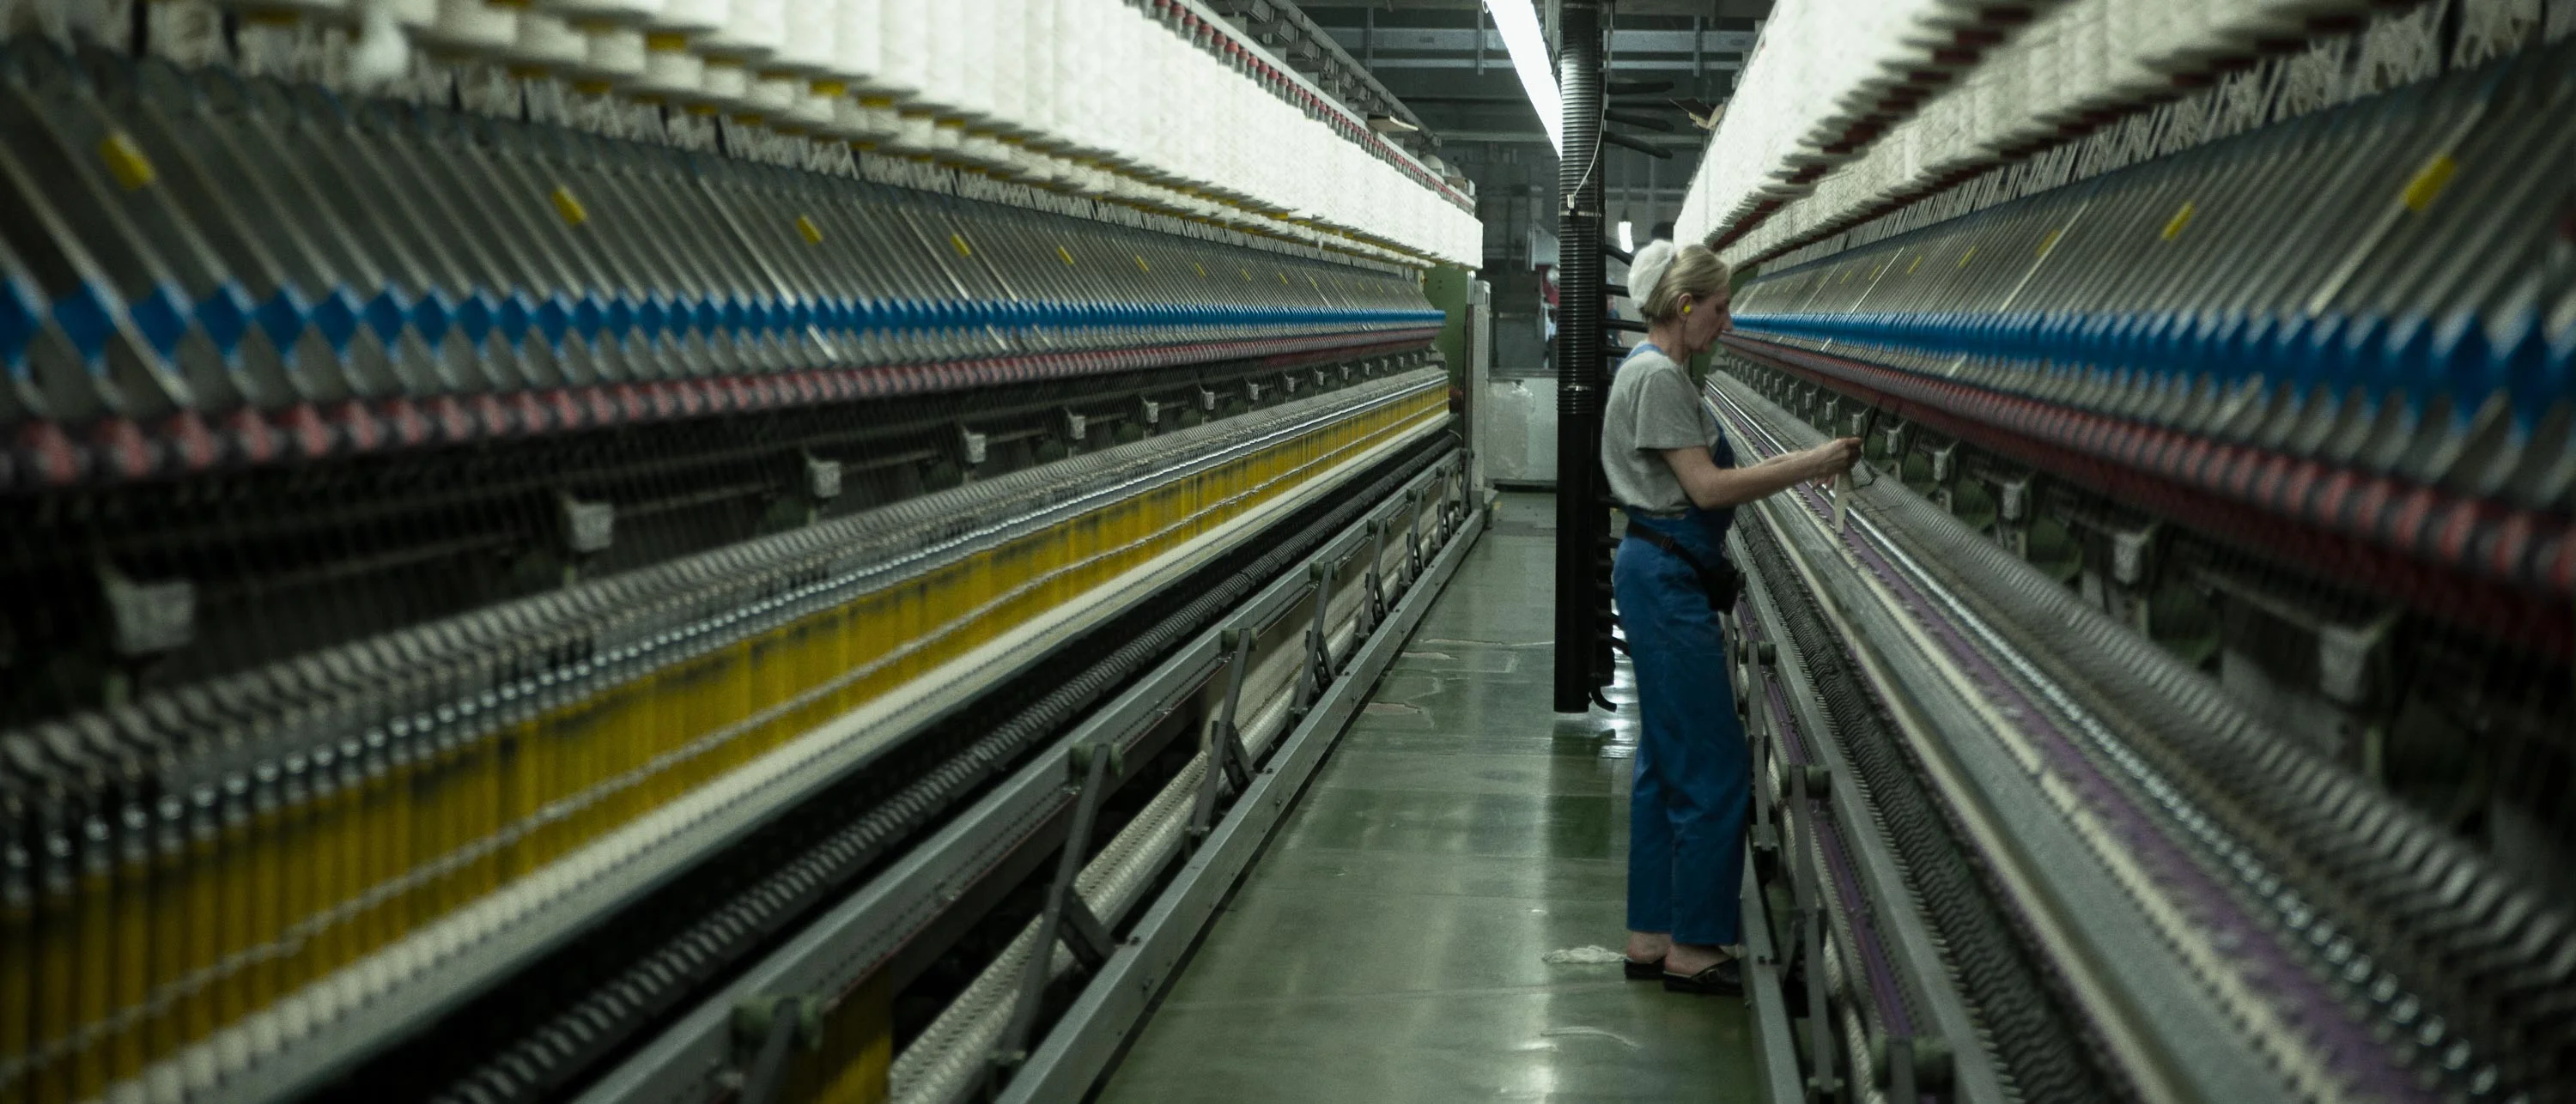 ASKET - The Merino Wool Spinning Mill - Poland